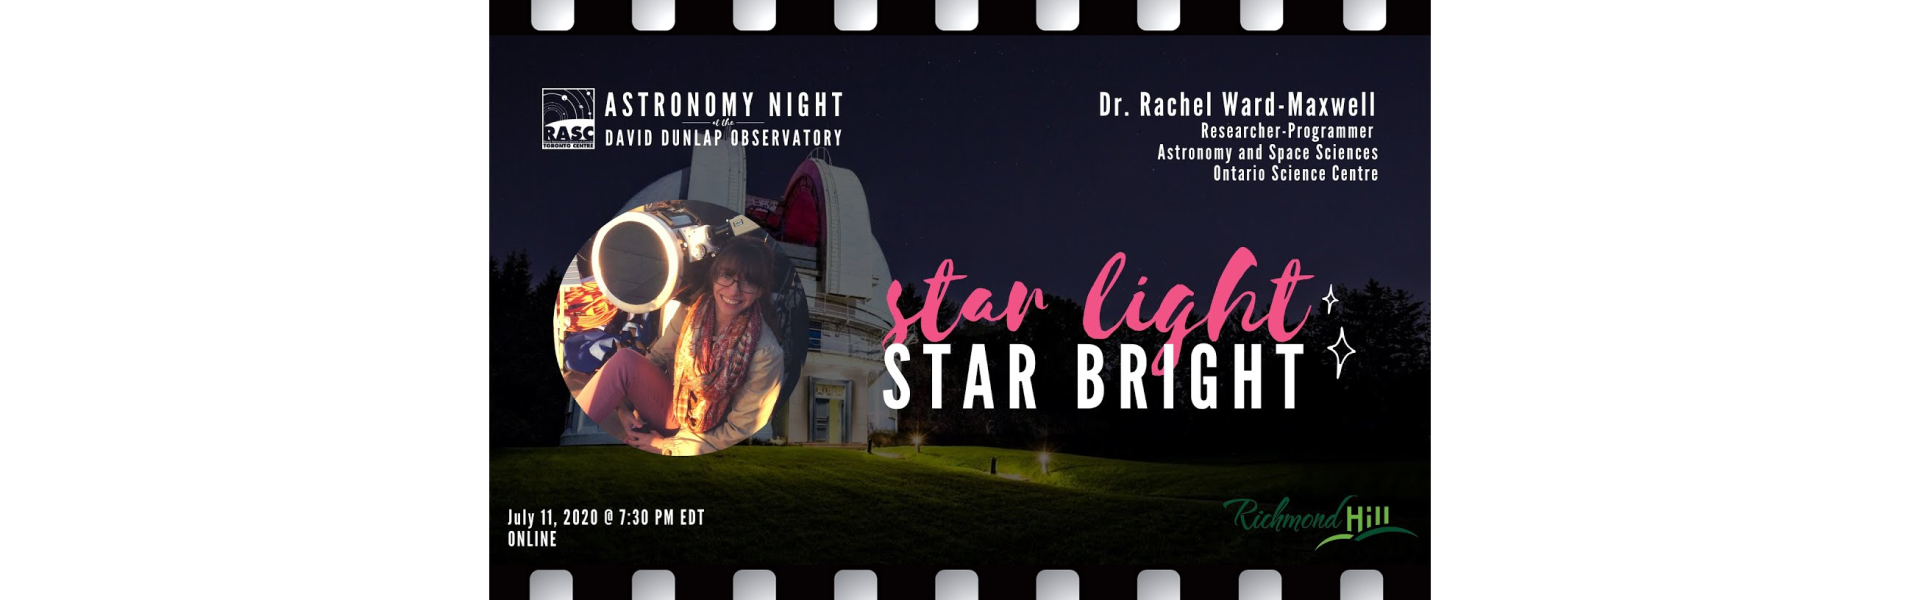 Star Light, Star Bright with Dr Rachel Ward-Maxwell